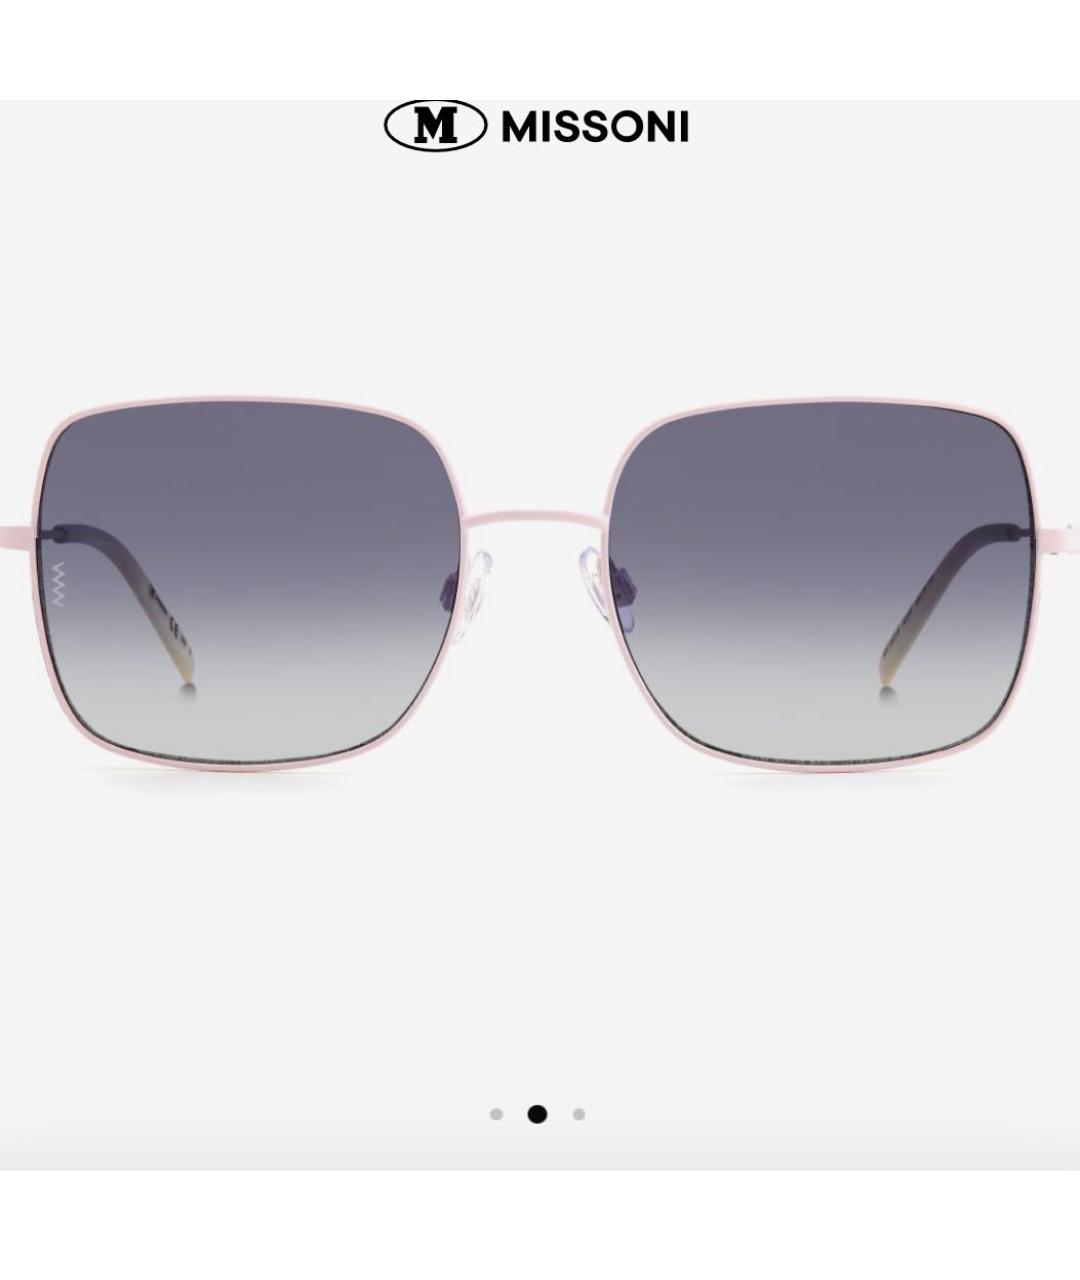 M MISSONI Розовые металлические солнцезащитные очки, фото 2